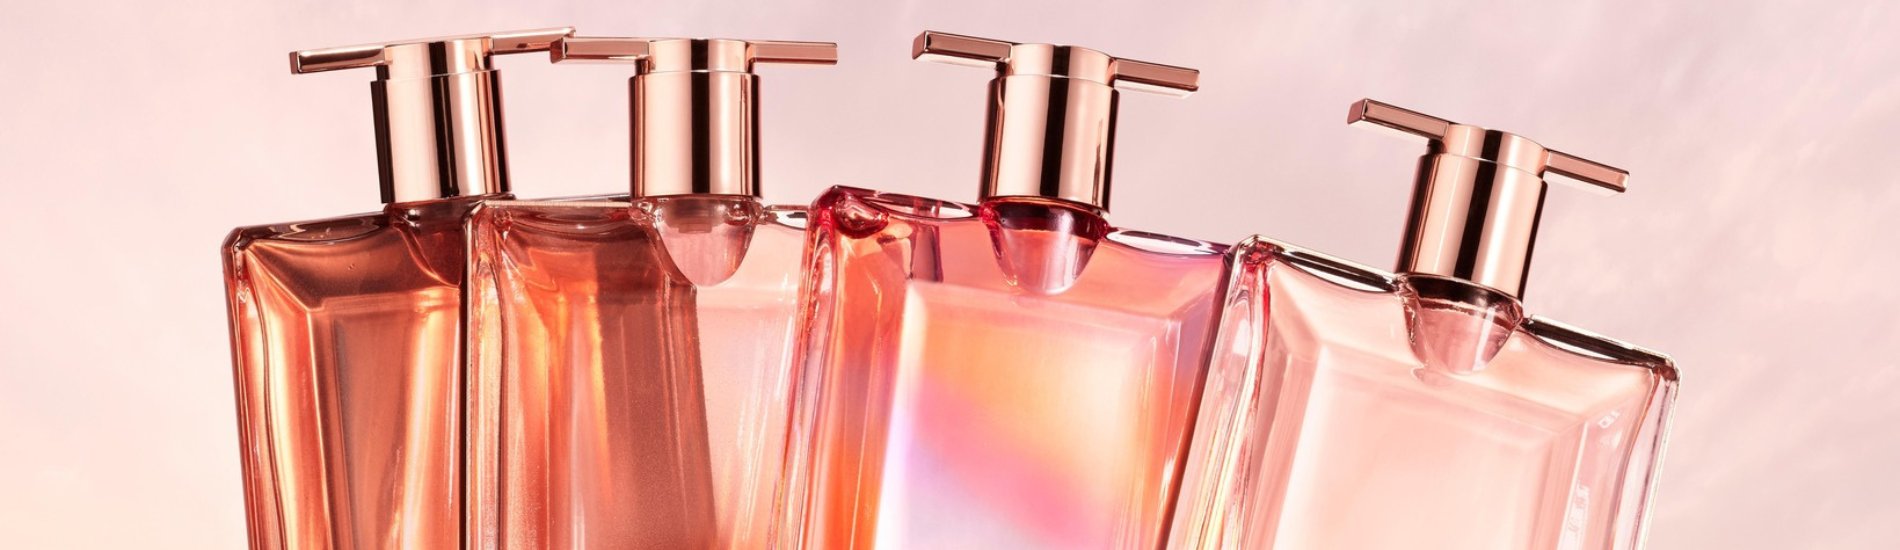 Women's Fragrances - Ascent Luxury Cosmetics